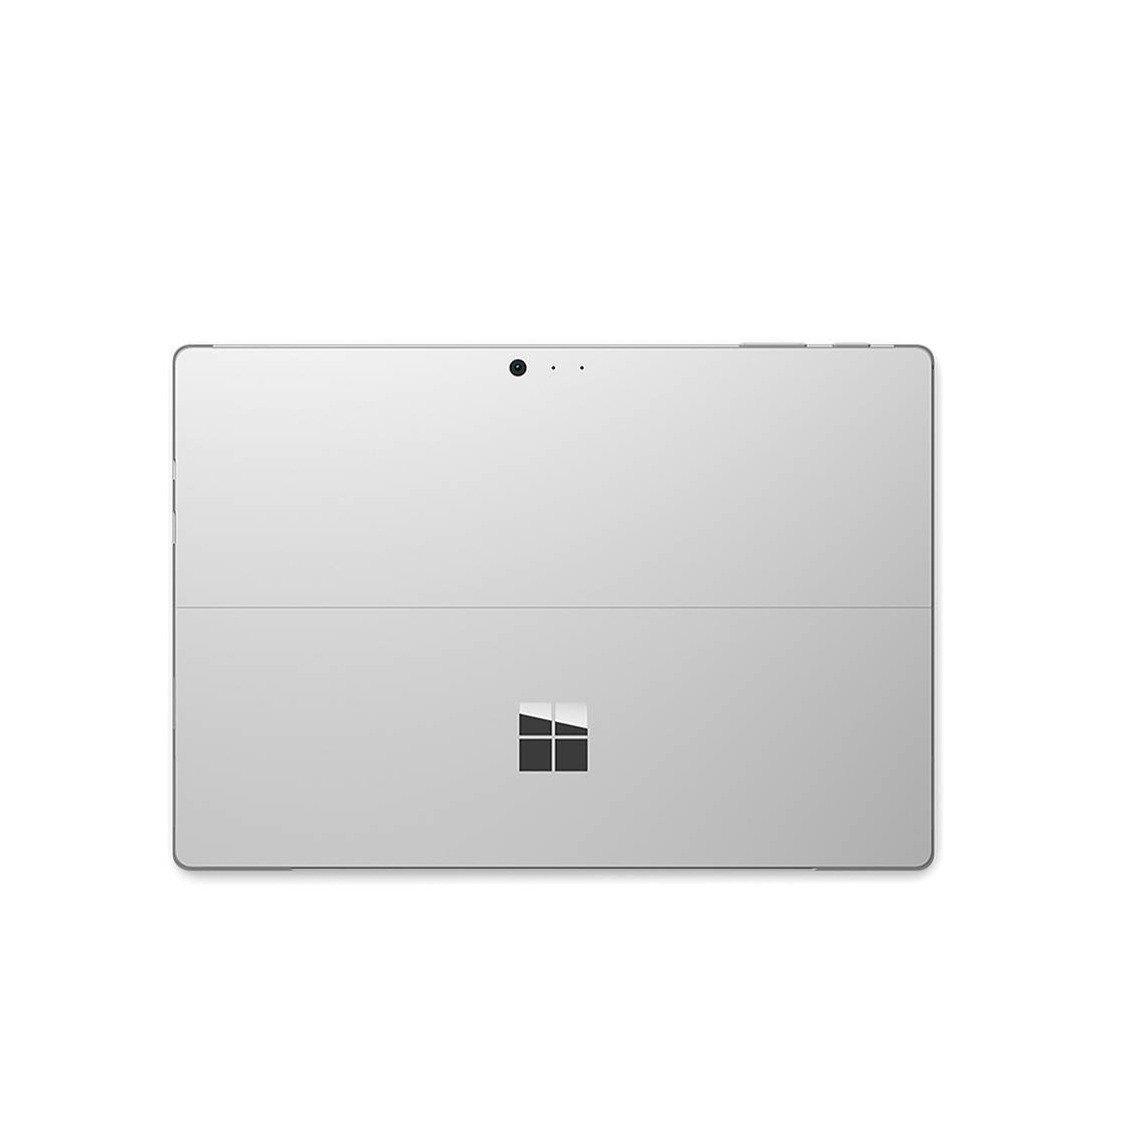 購入廉価Microsoft Surface Core i5 6300U 2.5GHz 8GB 256GB SSD 12インチ Win10 64bit Office USB3.0 Wi-Fi [81735] Windows